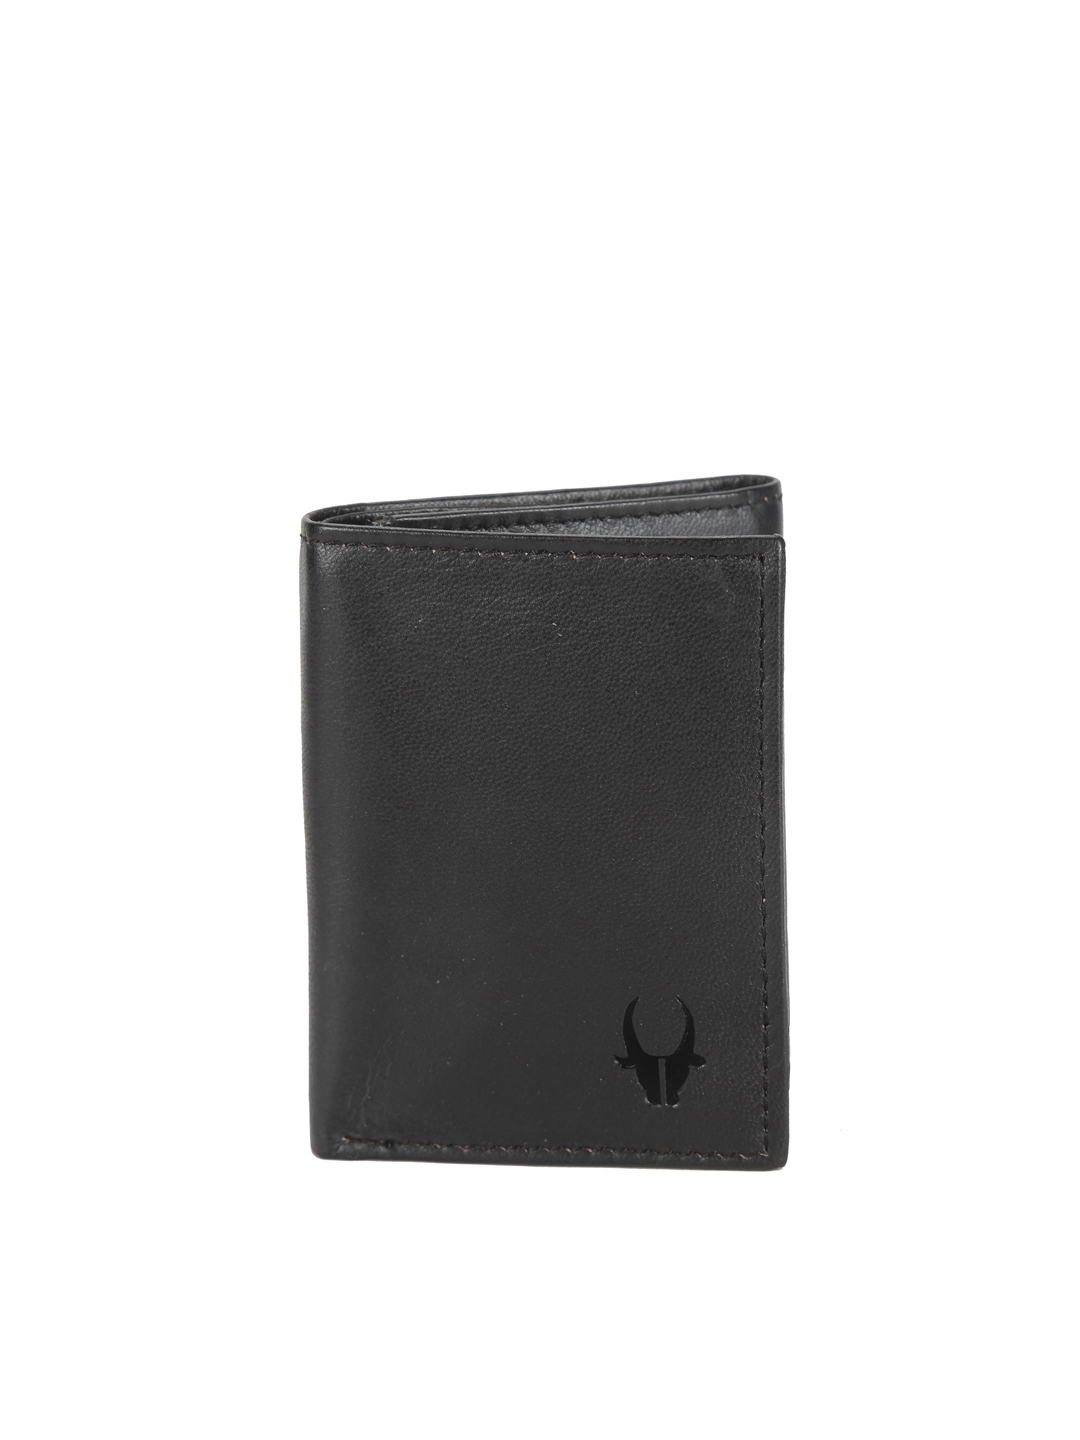 WildHorn Men Black Genuine Leather Wallet